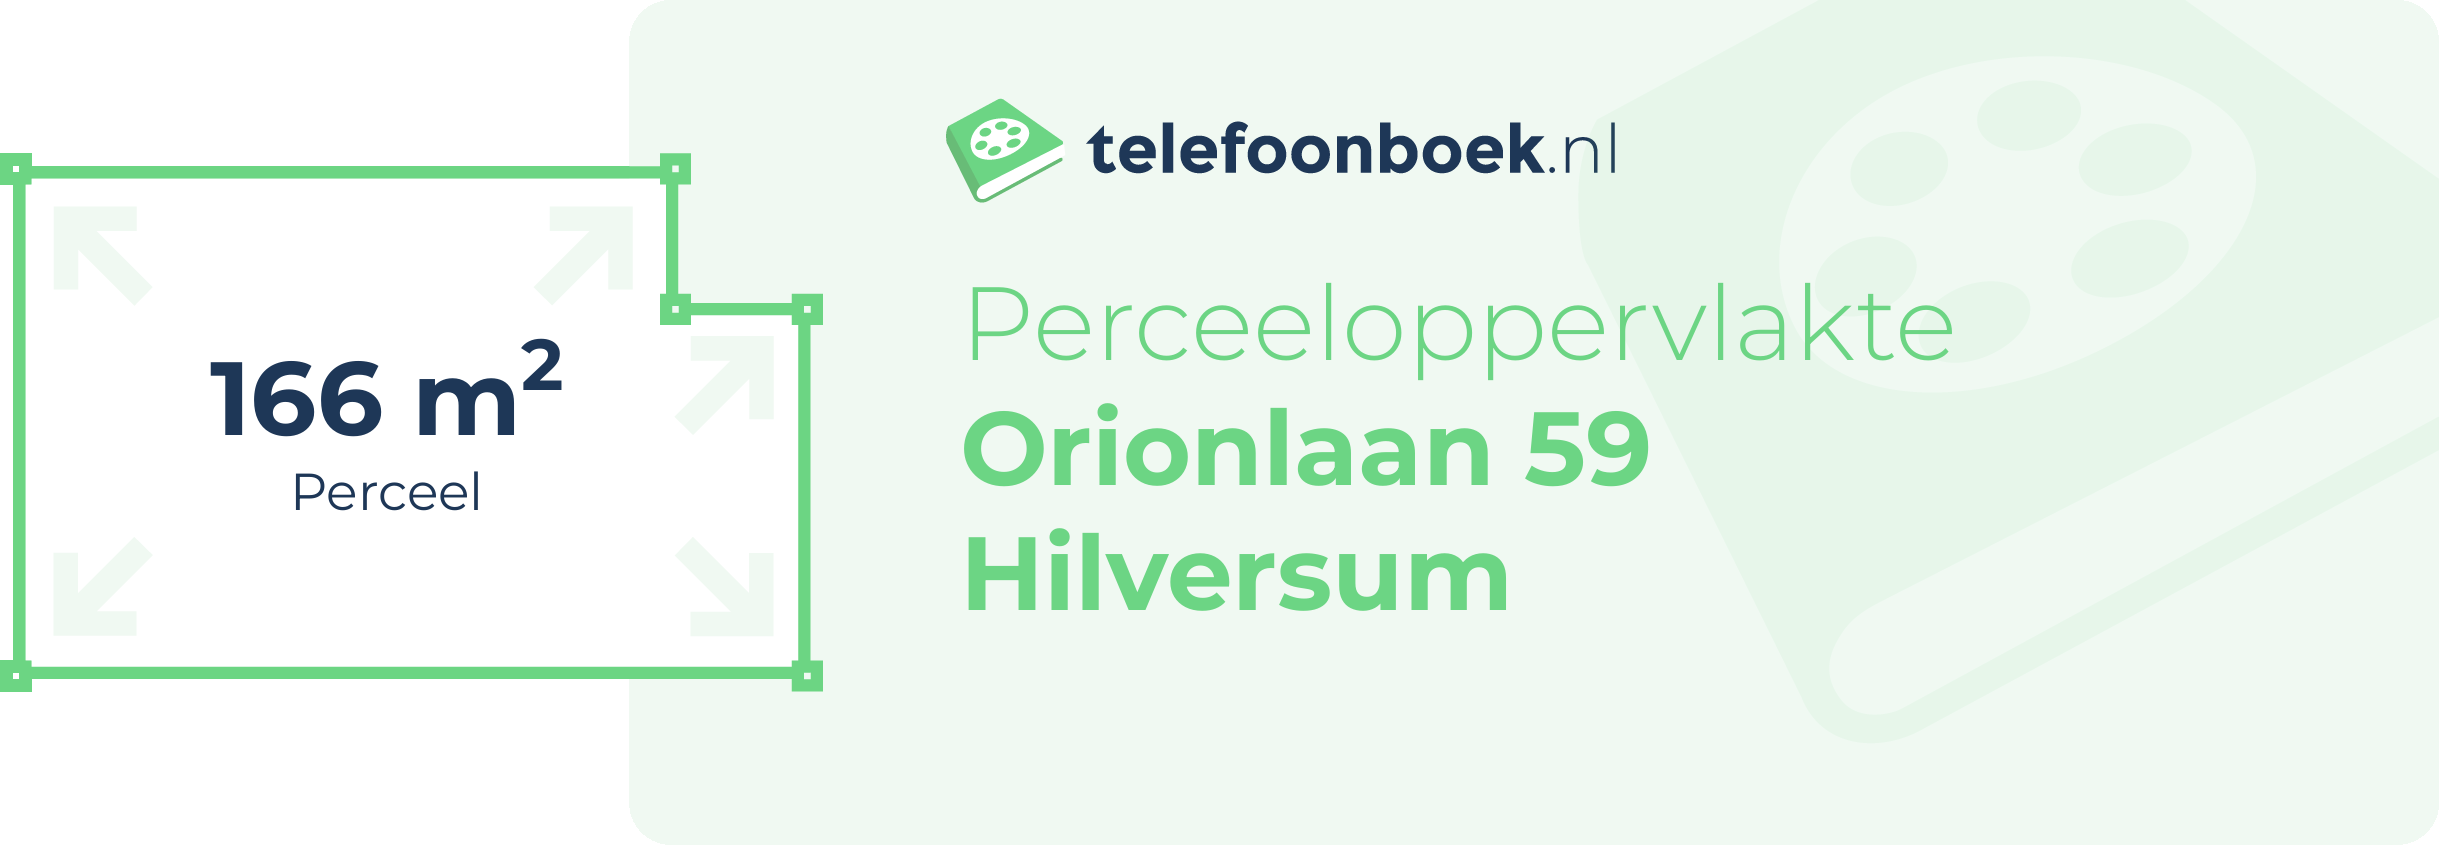 Perceeloppervlakte Orionlaan 59 Hilversum